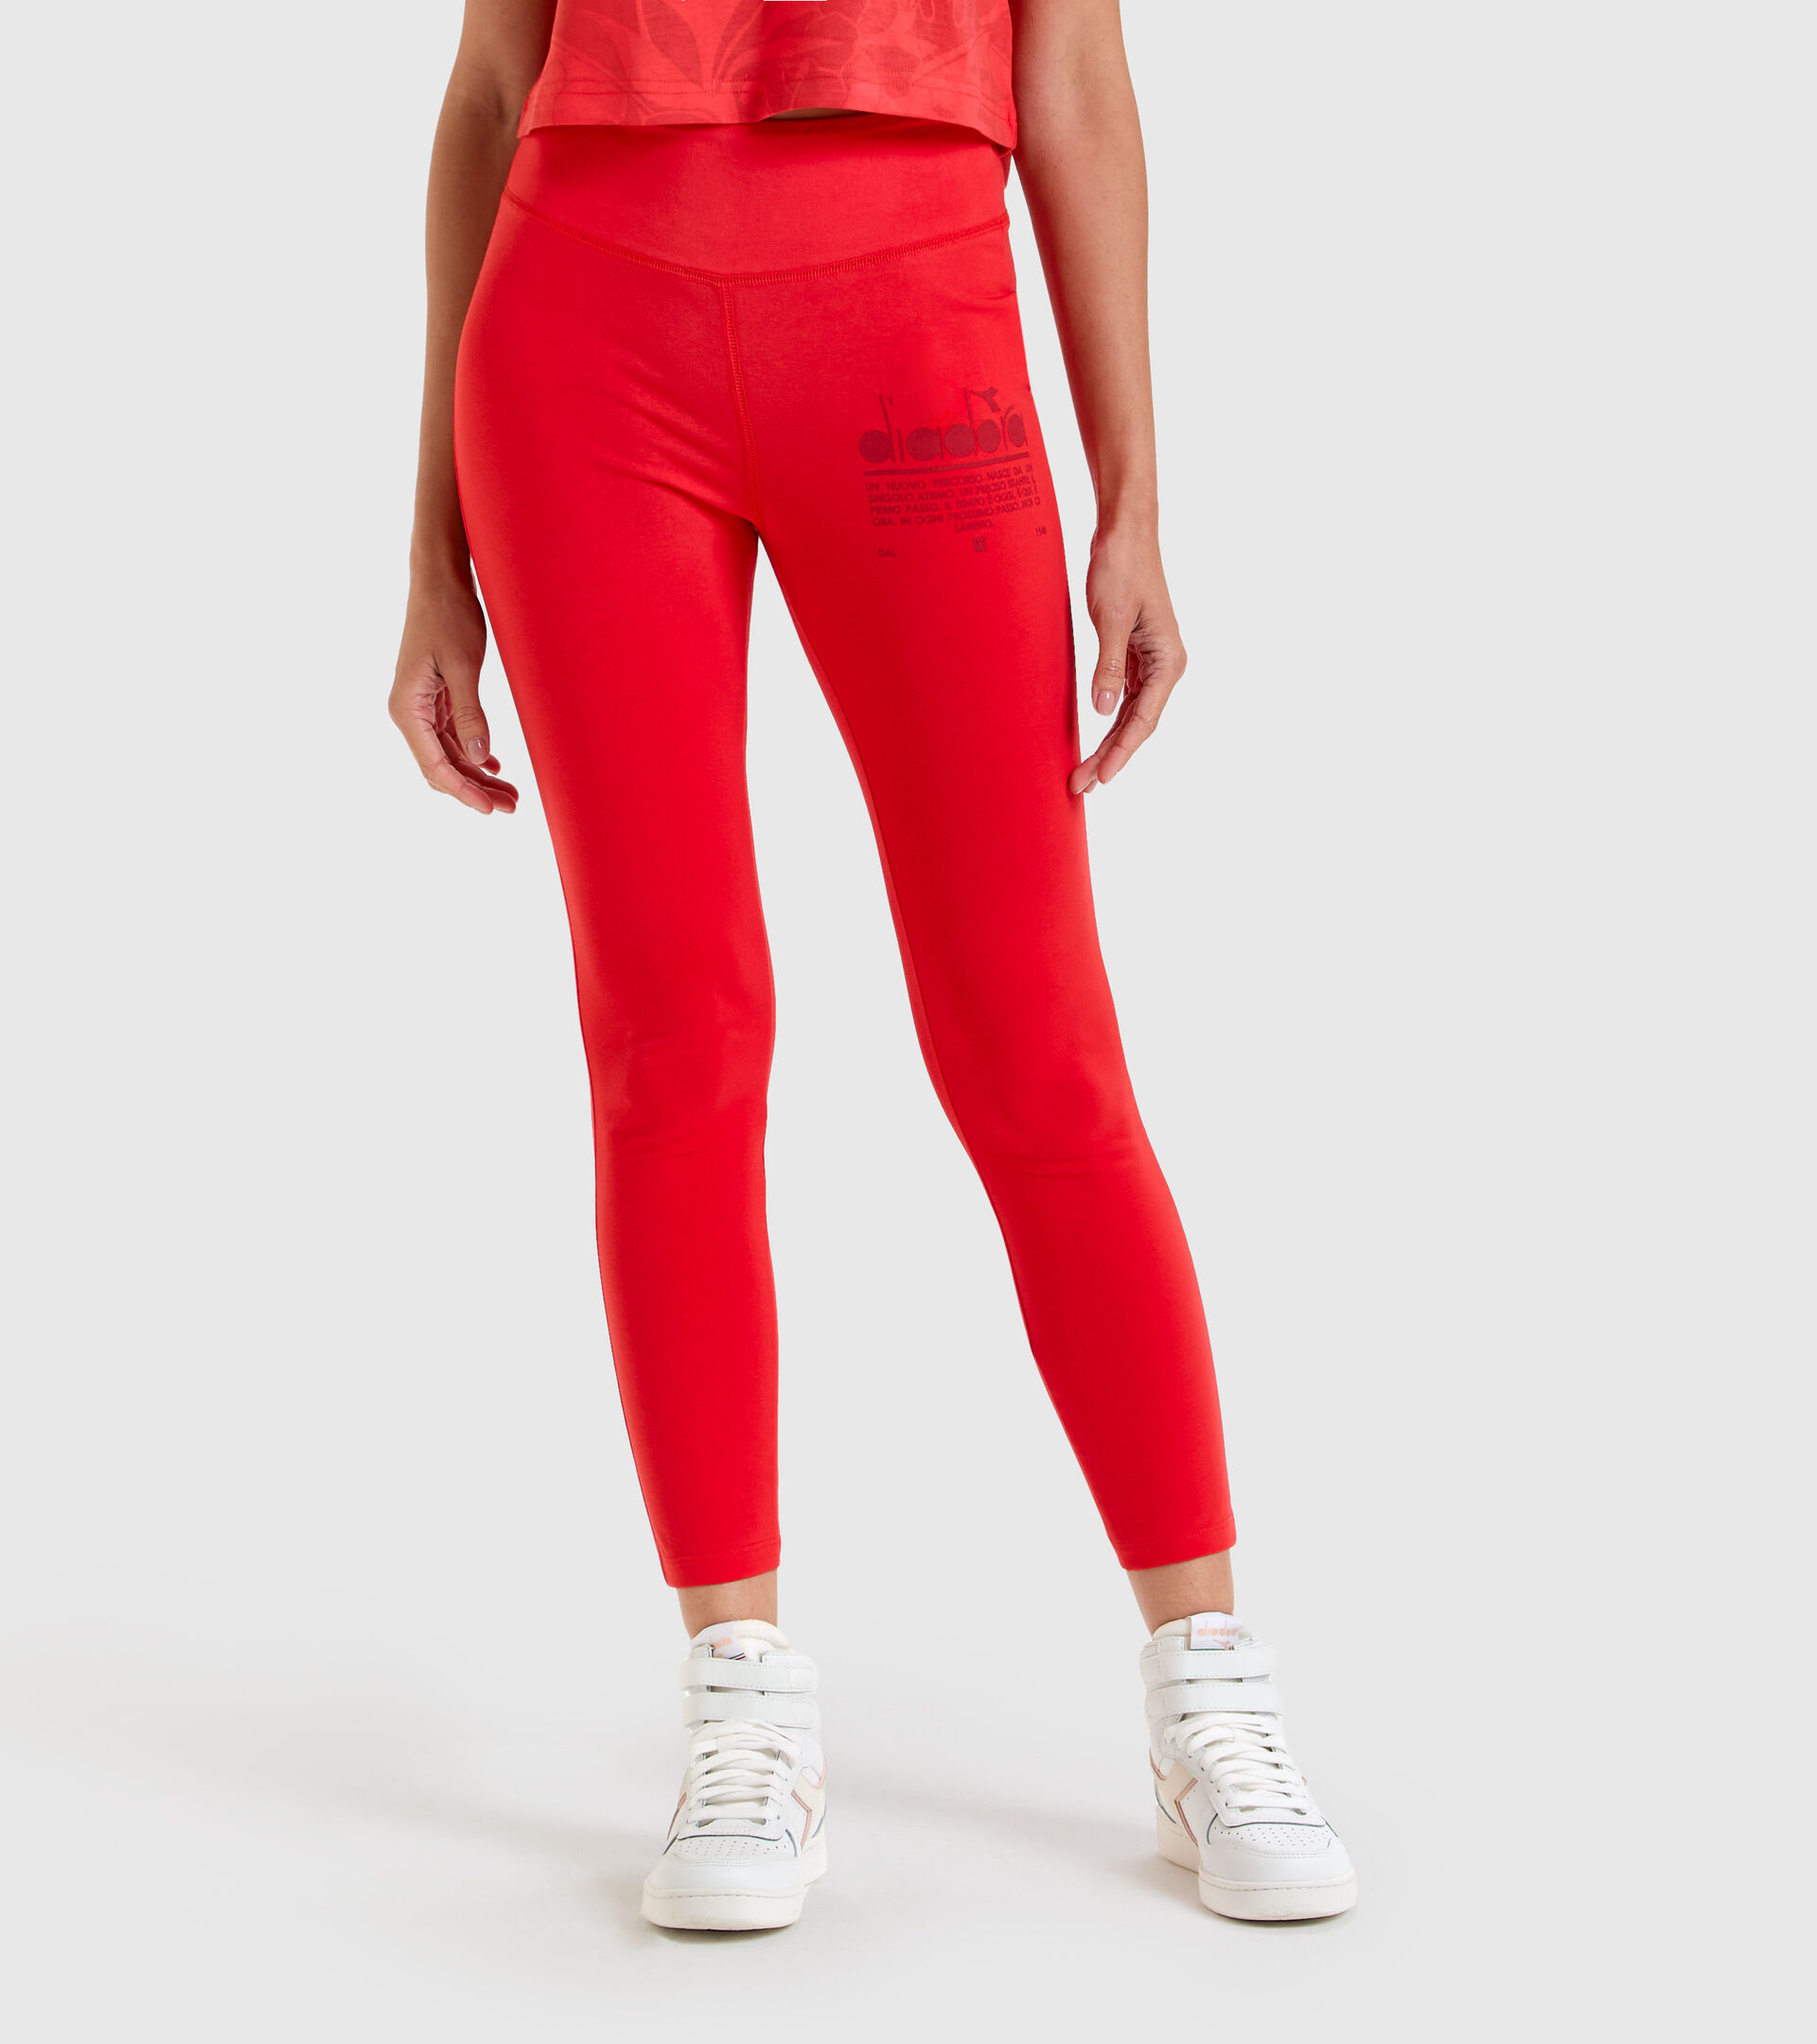 Stretch leggings - Women L. LEGGINGS MANIFESTO POPPY RED - Diadora